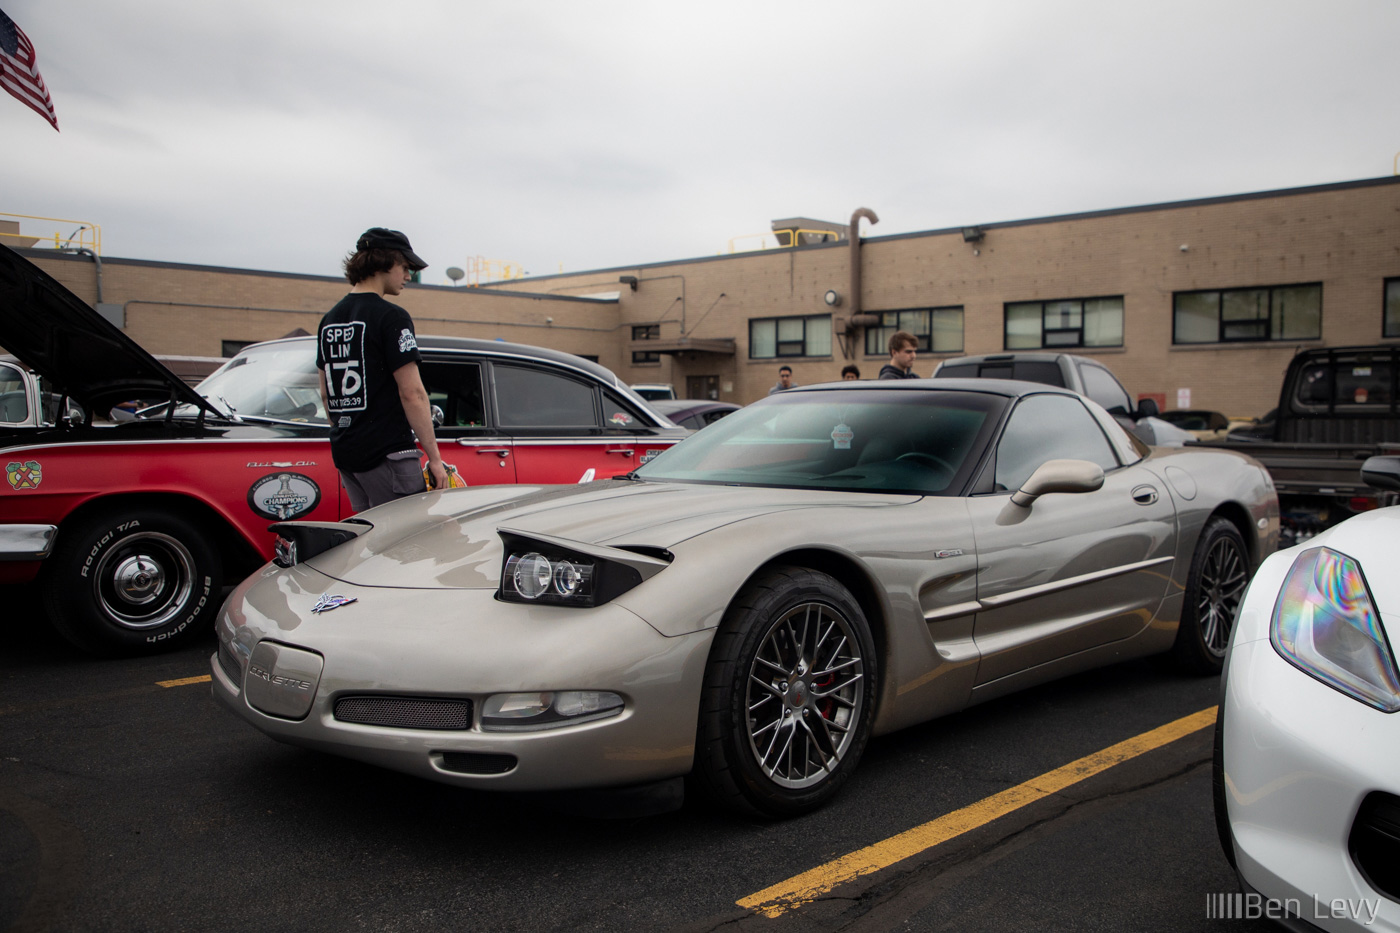 Chrome Popups on C5 Corvette at Cars & Coffee